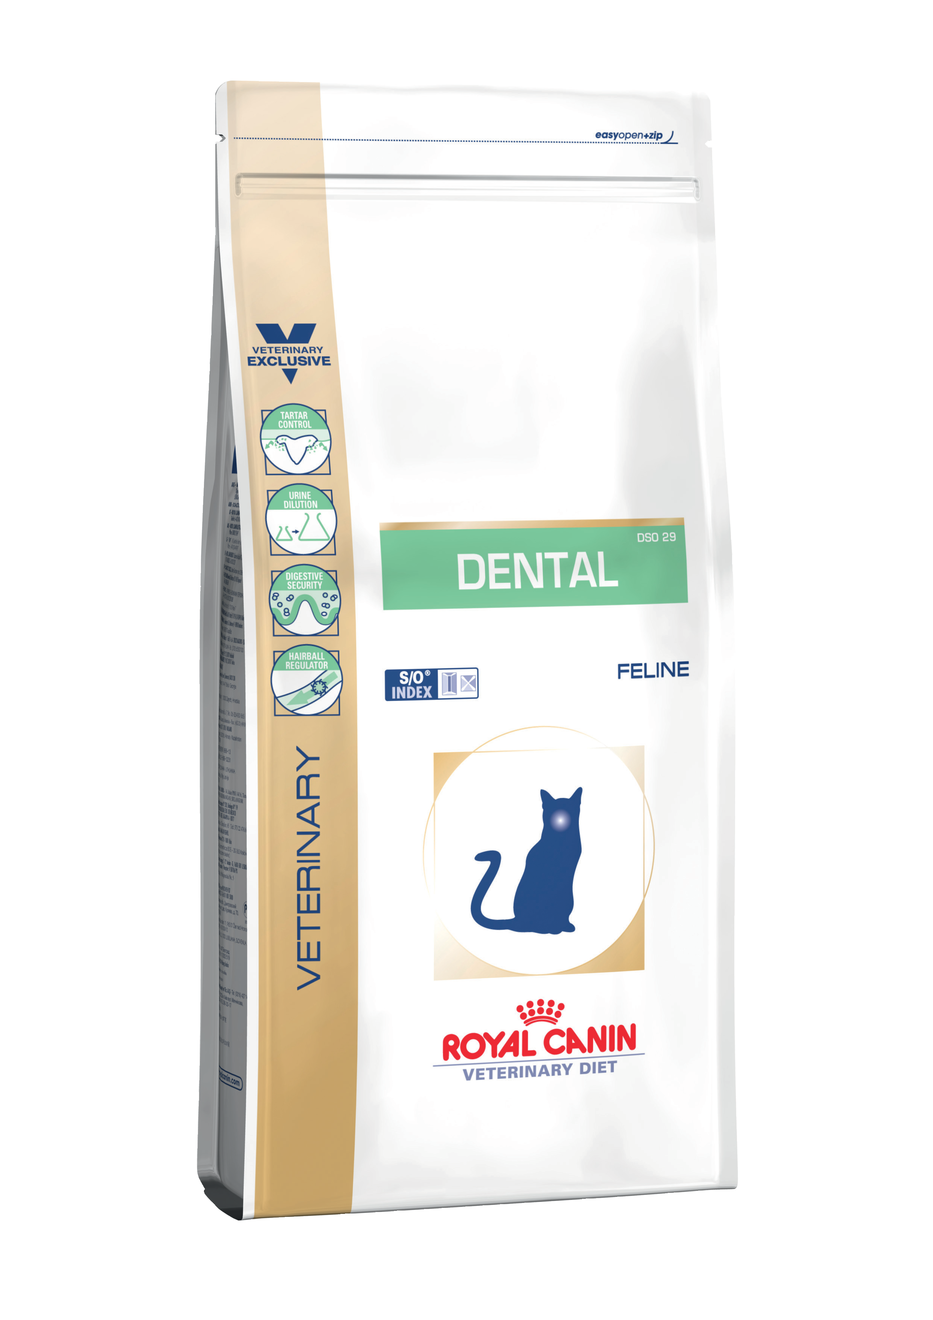 Royal Canin Veterinary Diet Cat DENTAL - 3kg